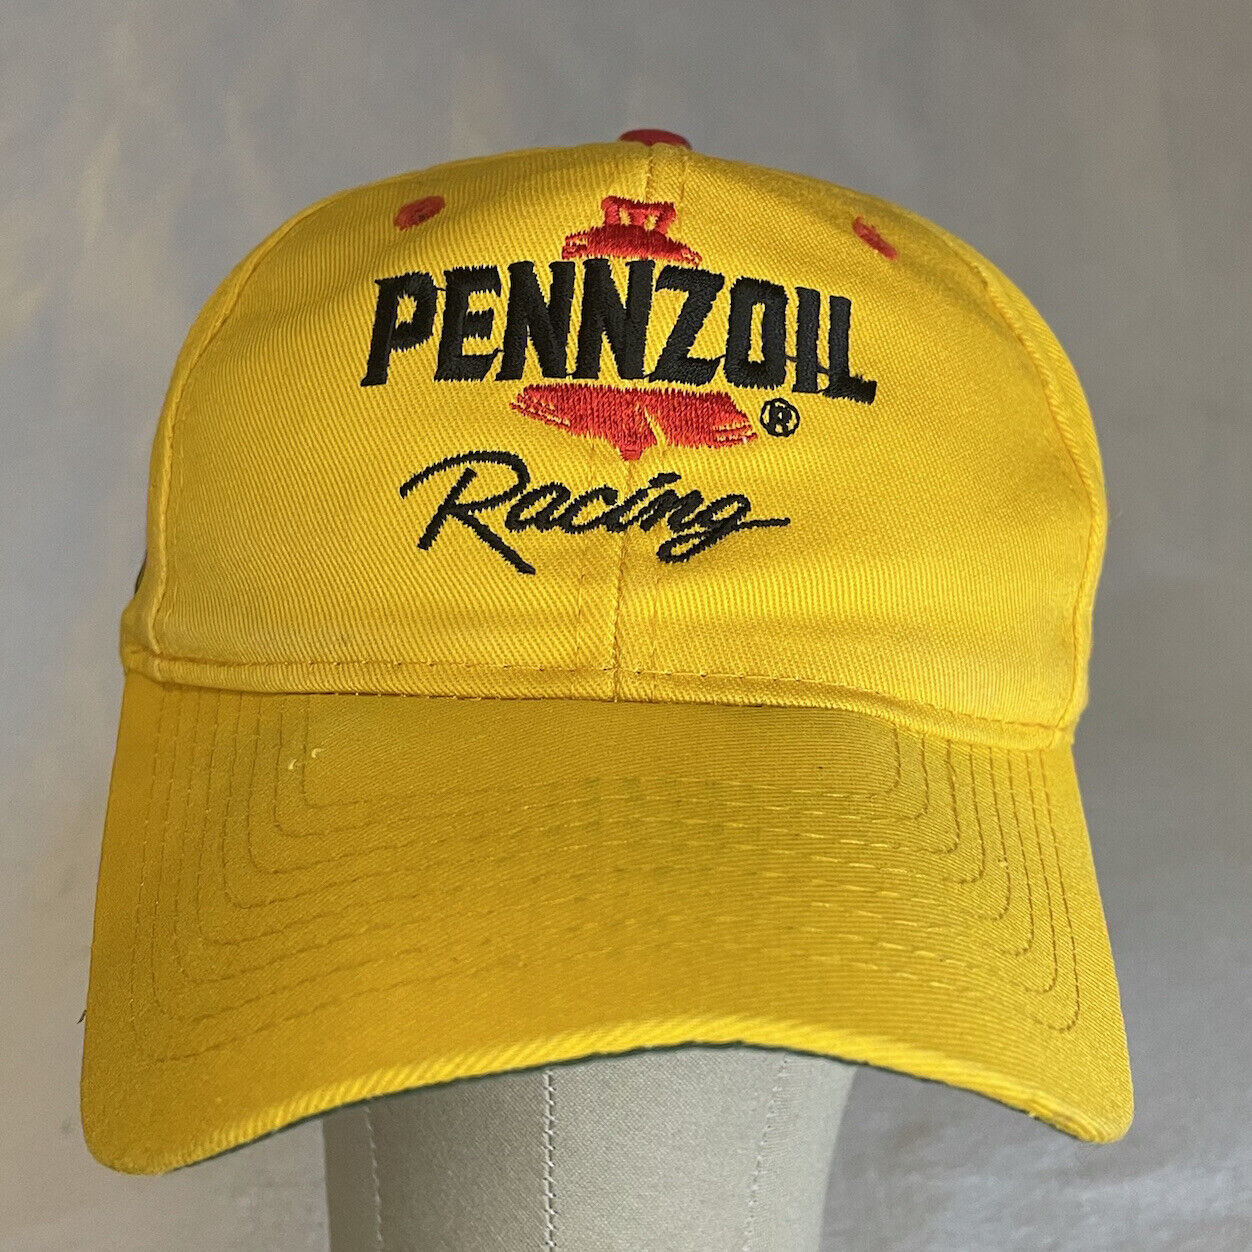 Vintage Michael Waltrip #30 Pennzoil Racing Professional Snapback NASCAR - $13.98